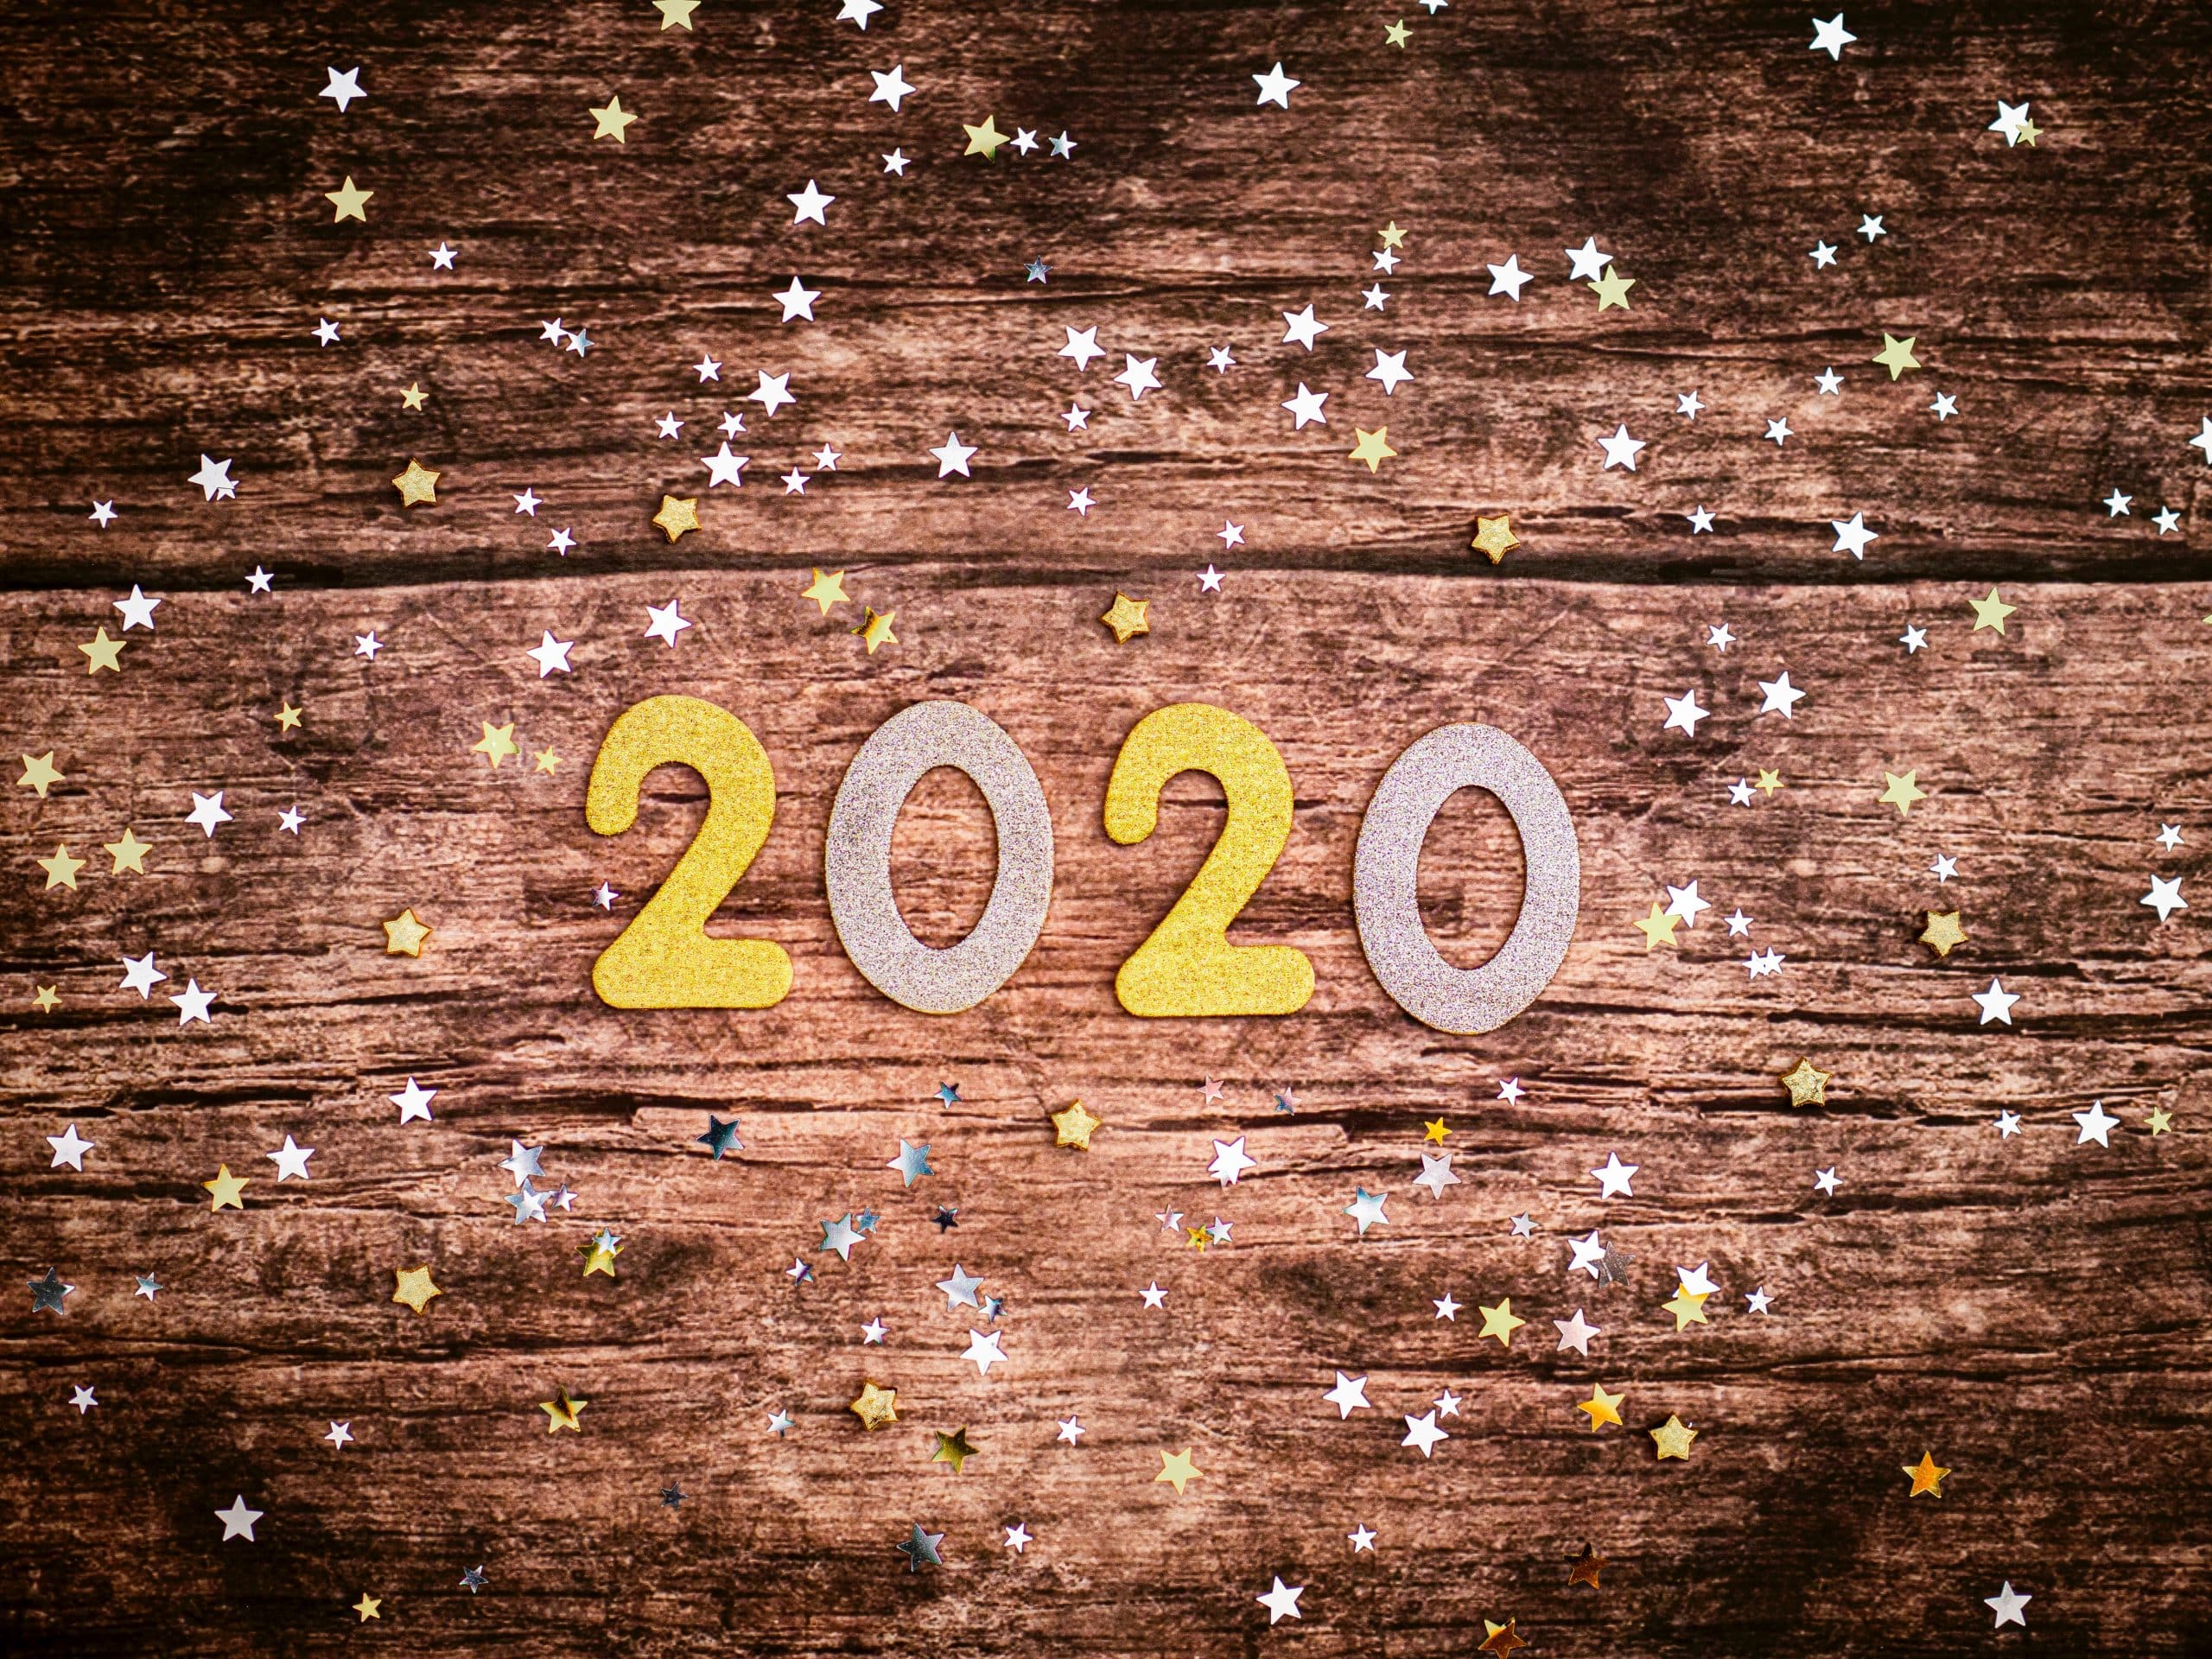 5 Software Development Predictions for 2020